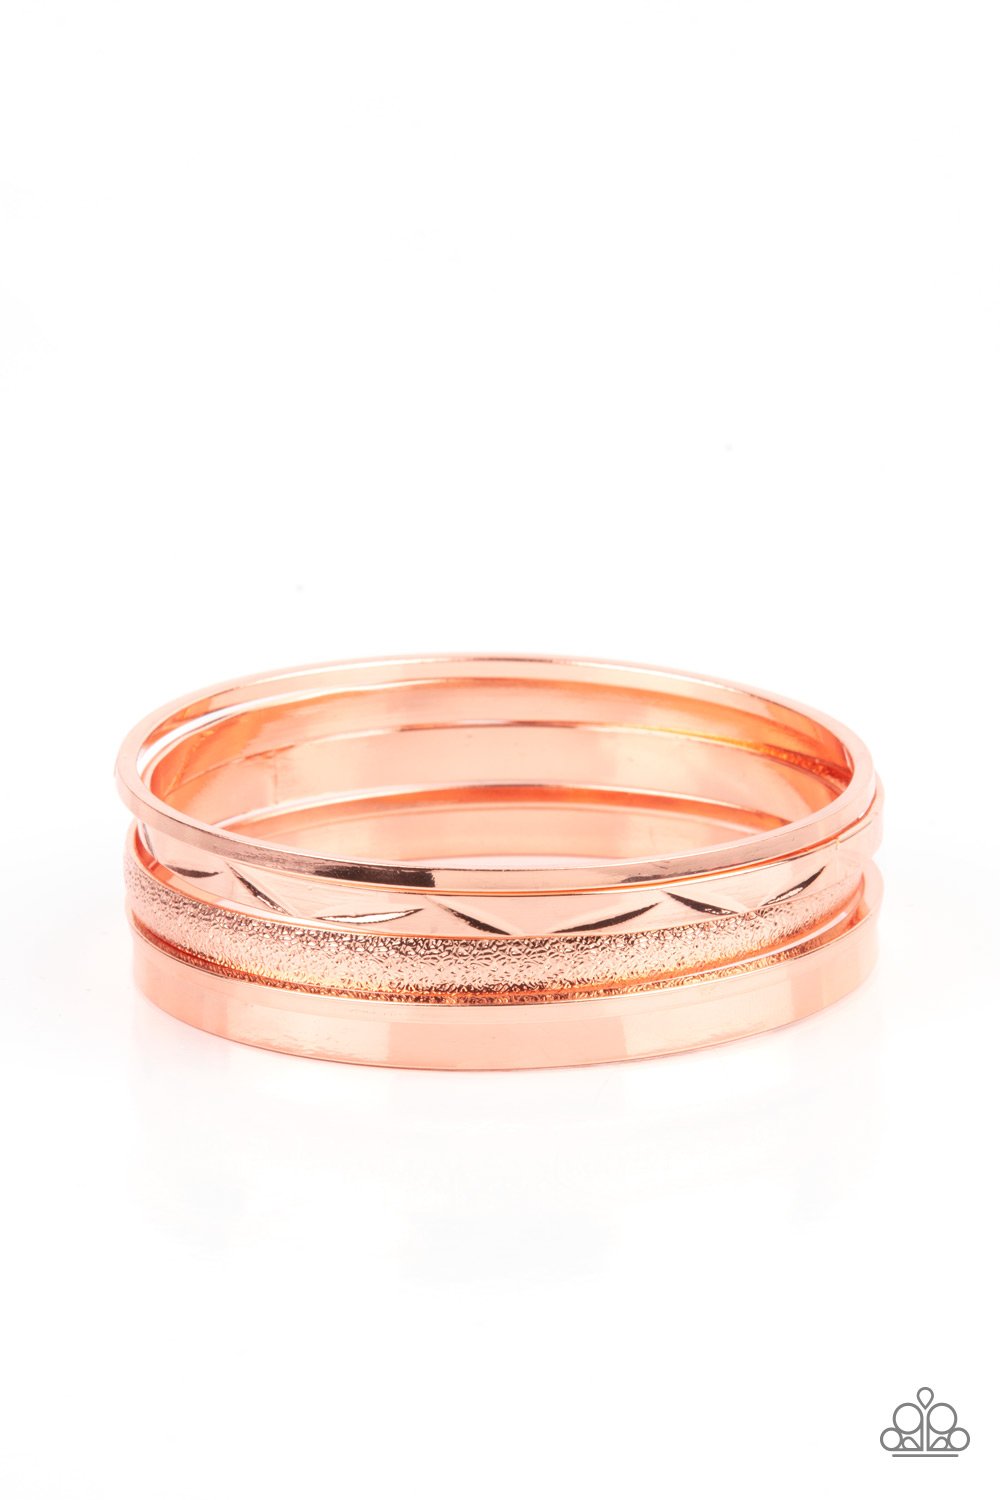 Stackable Style - Copper Bracelet - Paparazzi Accessories - Alies Bling Bar